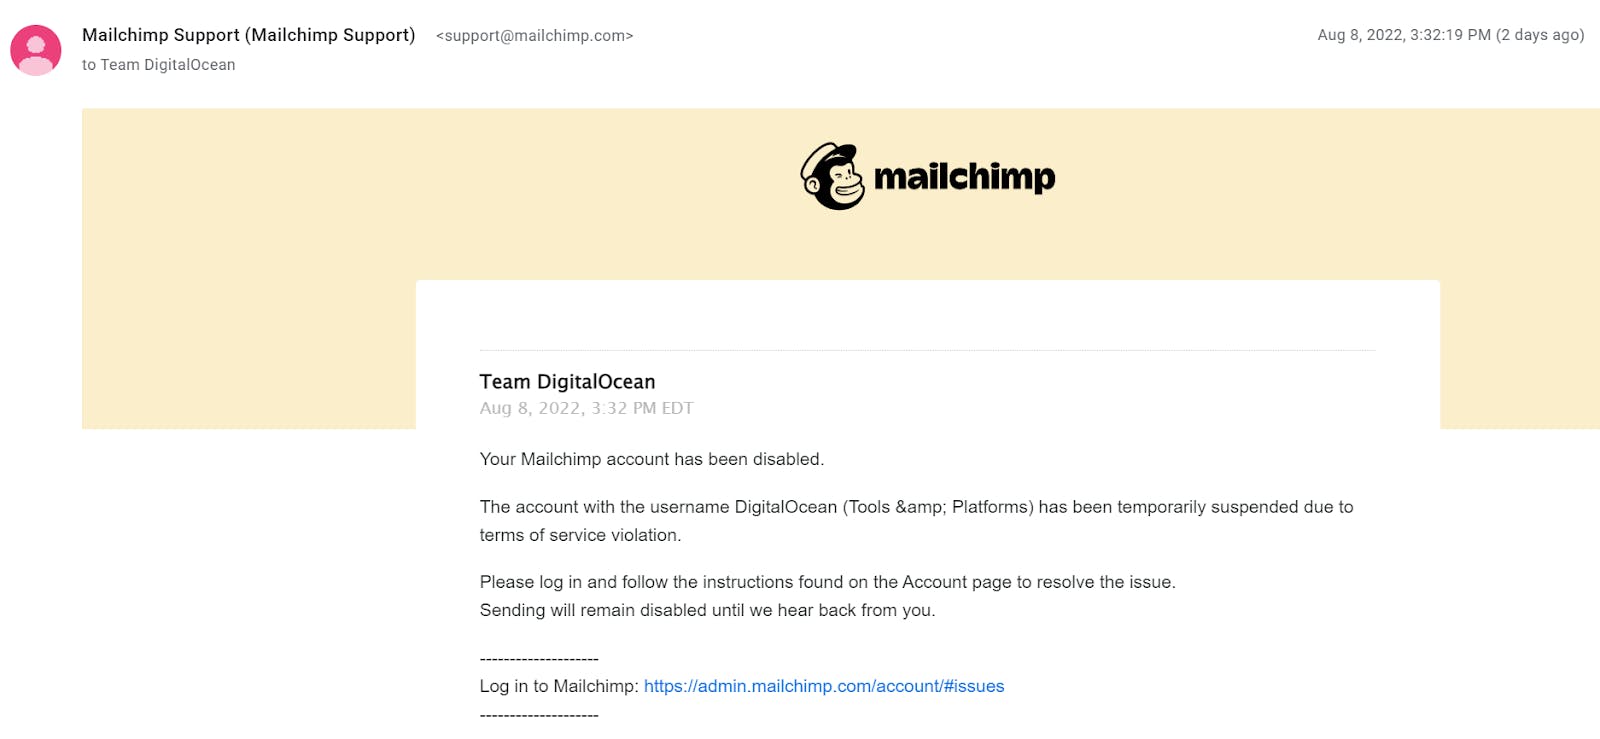 Mailchimp email to DigitalOcean